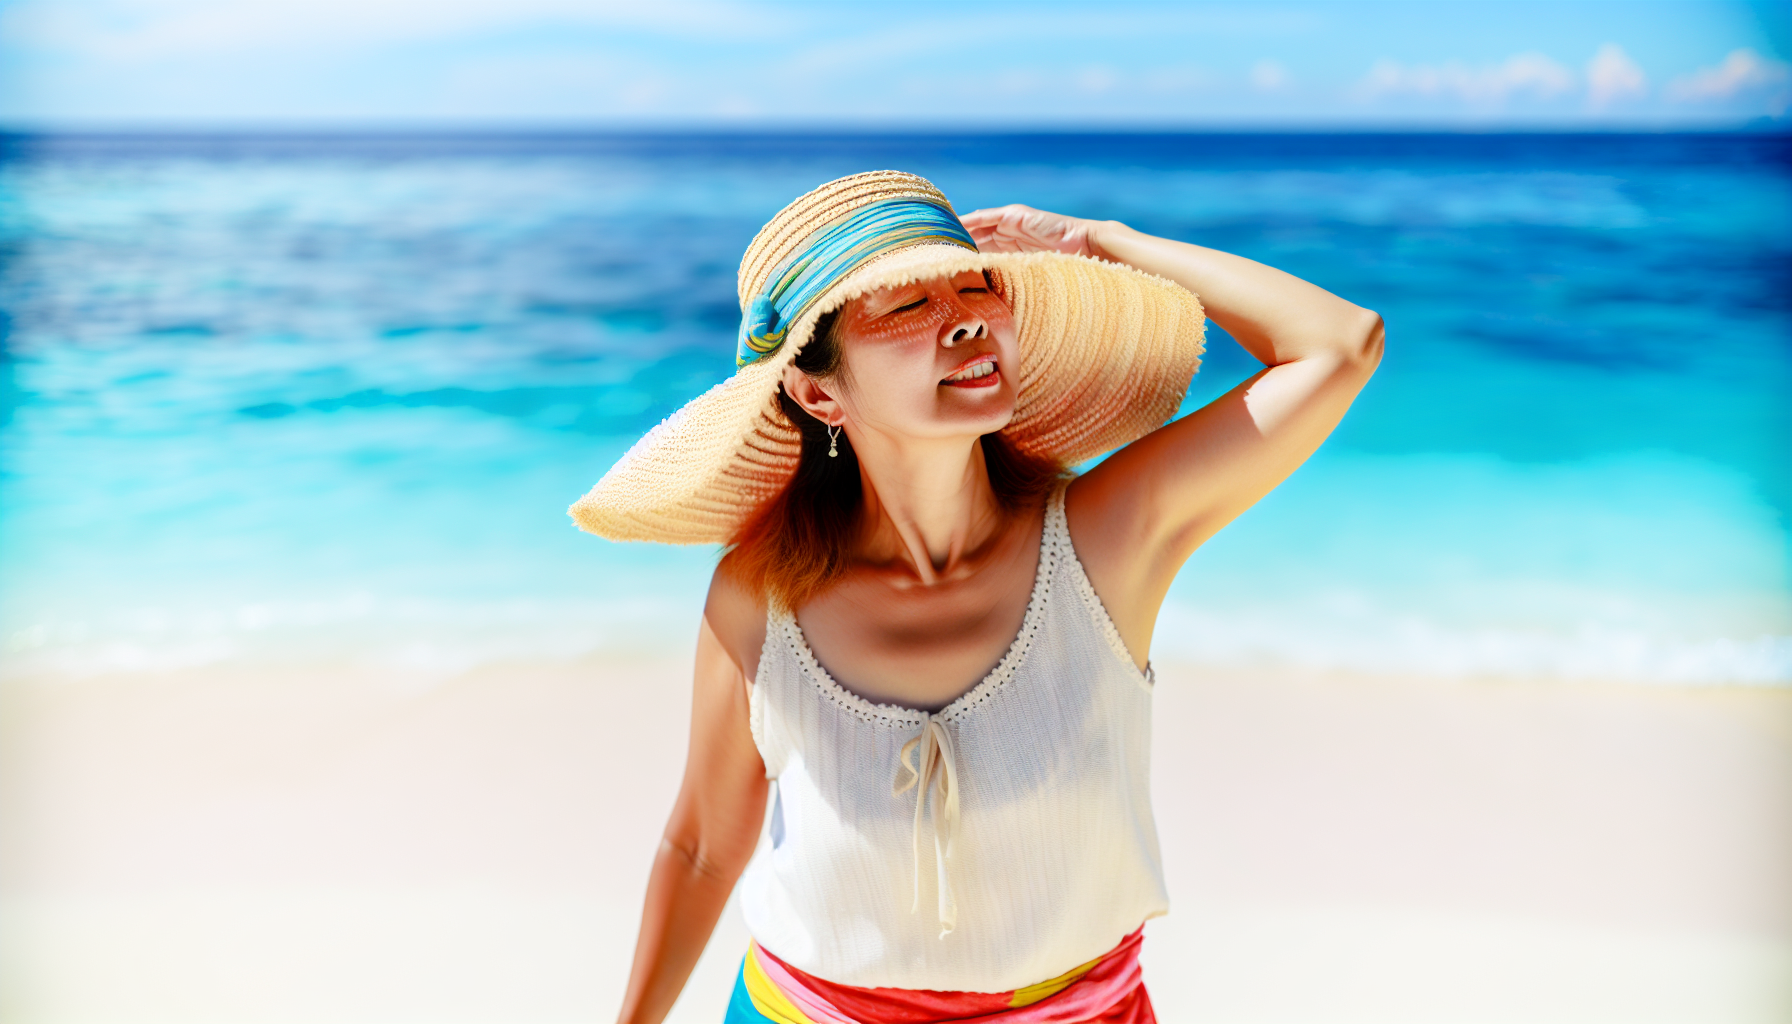 A woman wearing a stylish sun hat on the beach